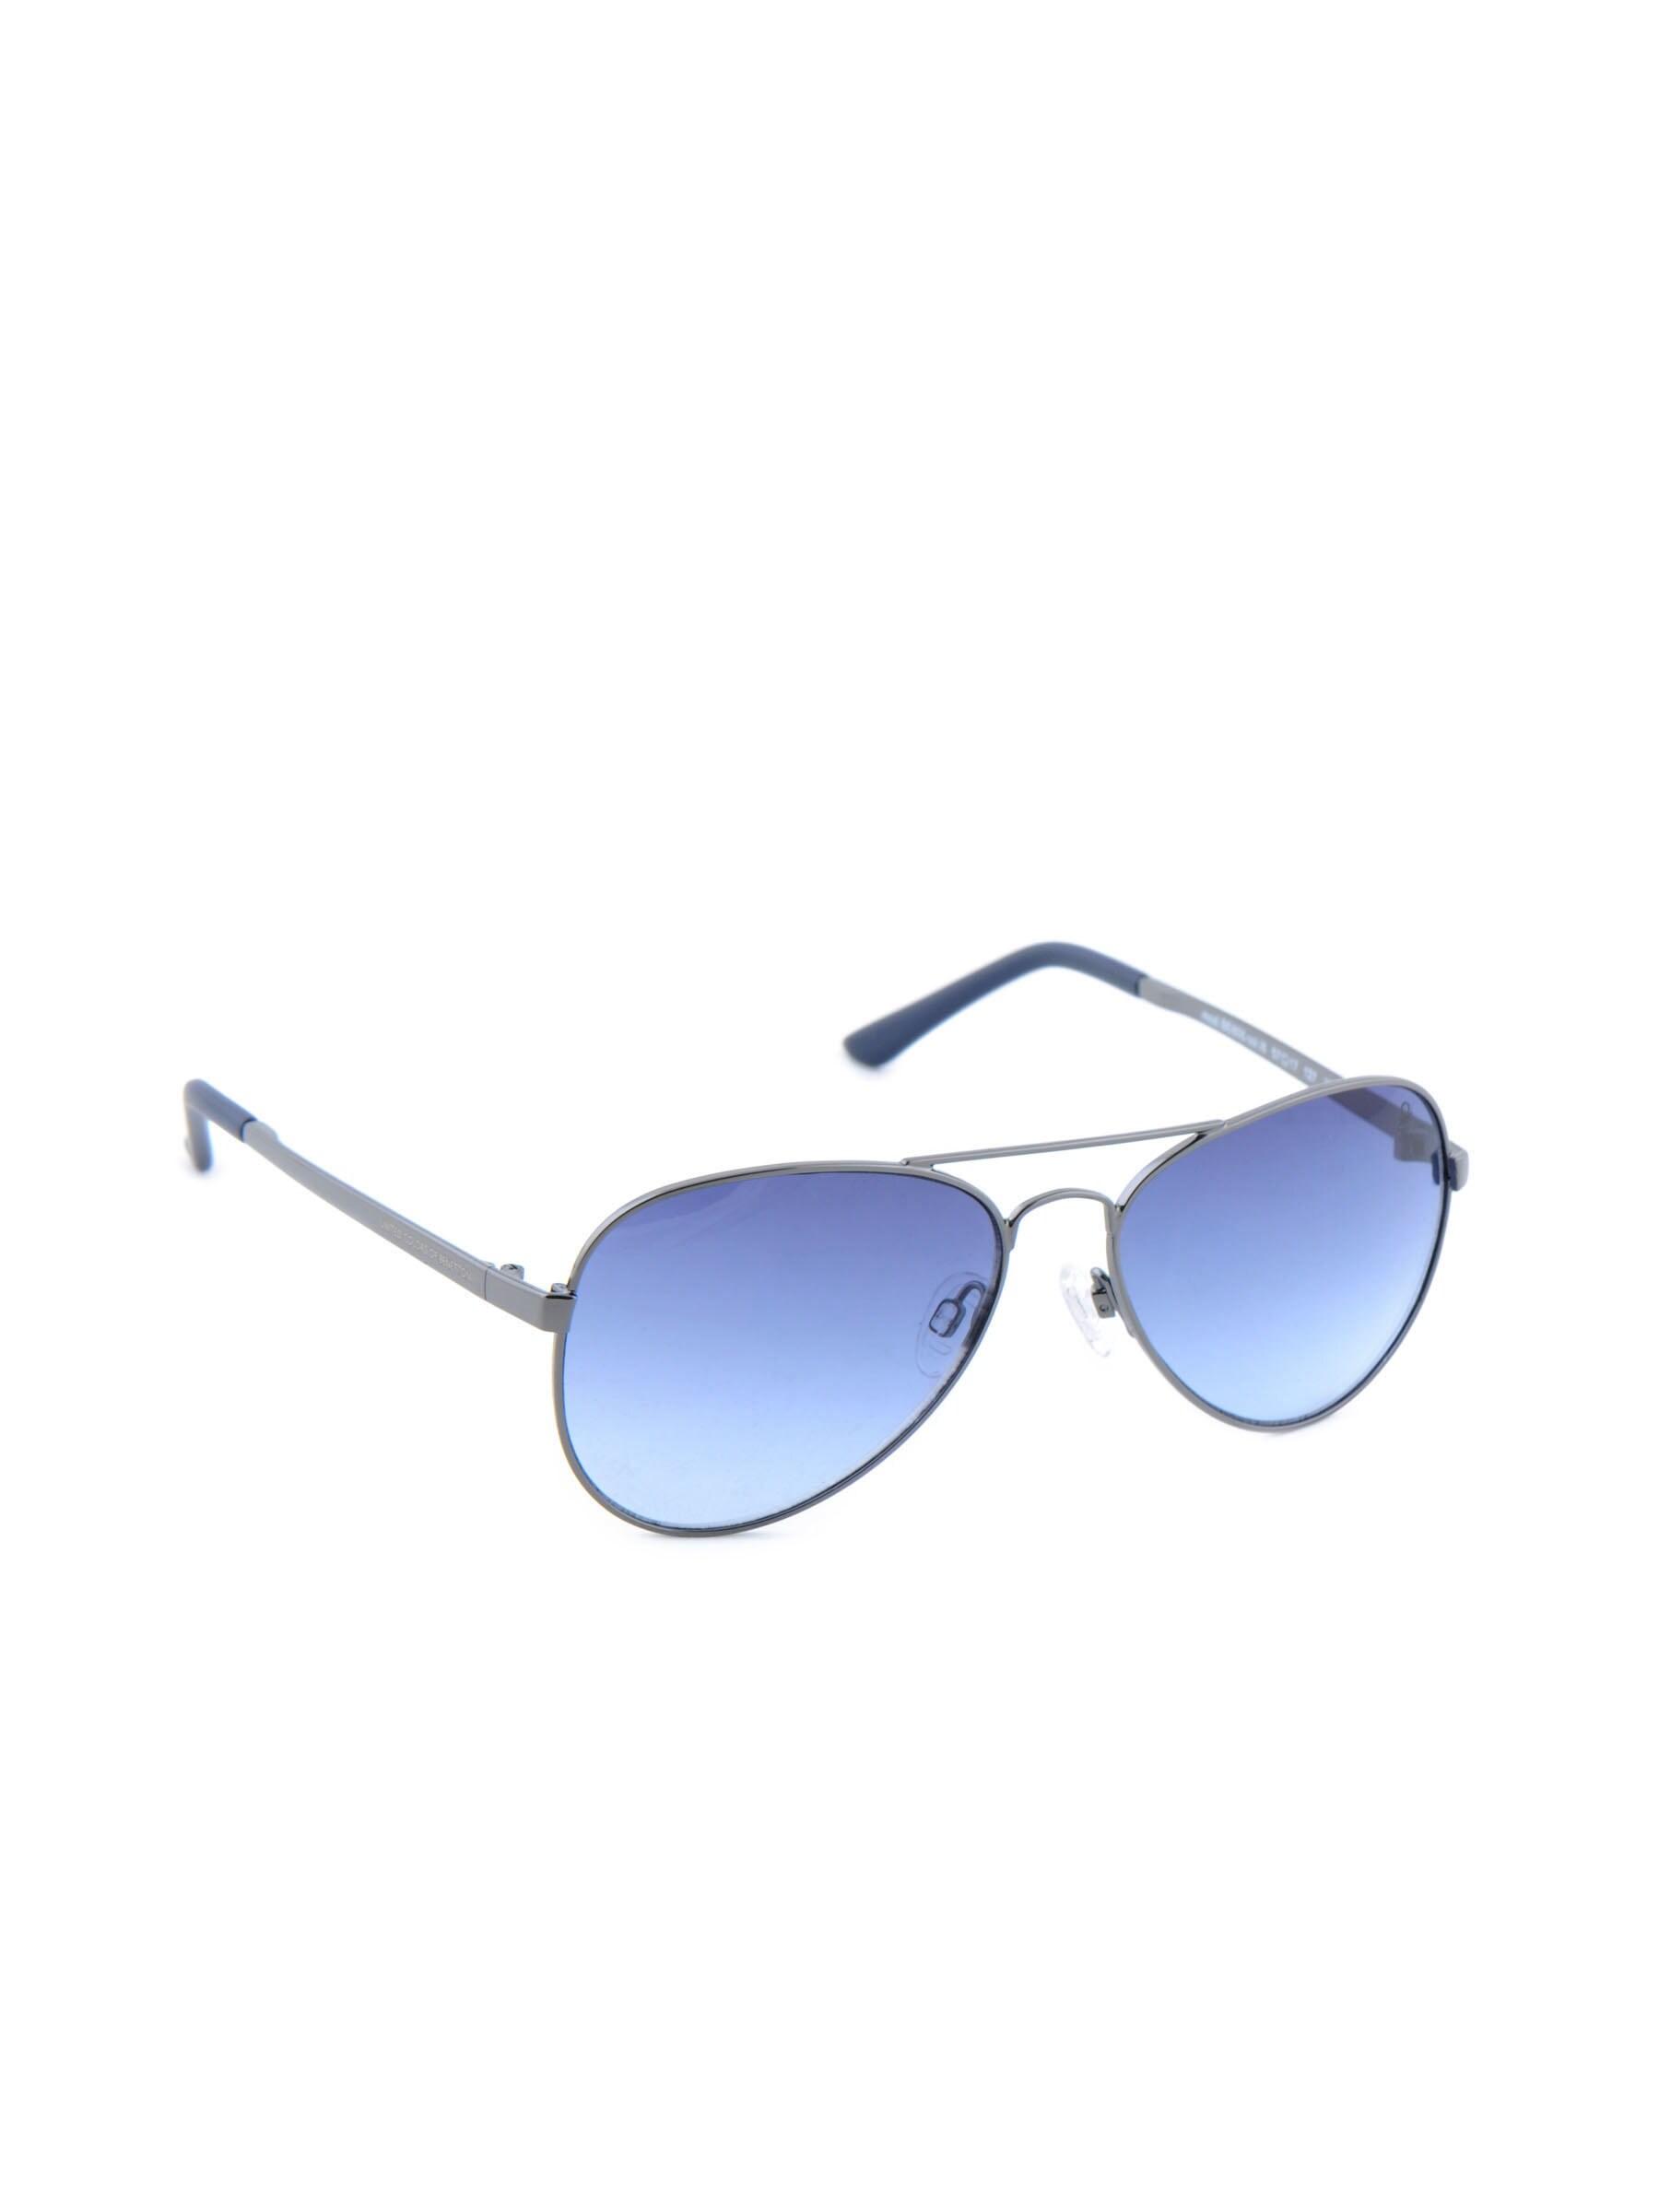 United Colors of Benetton Men Funky Eyewear Blue Sunglasses